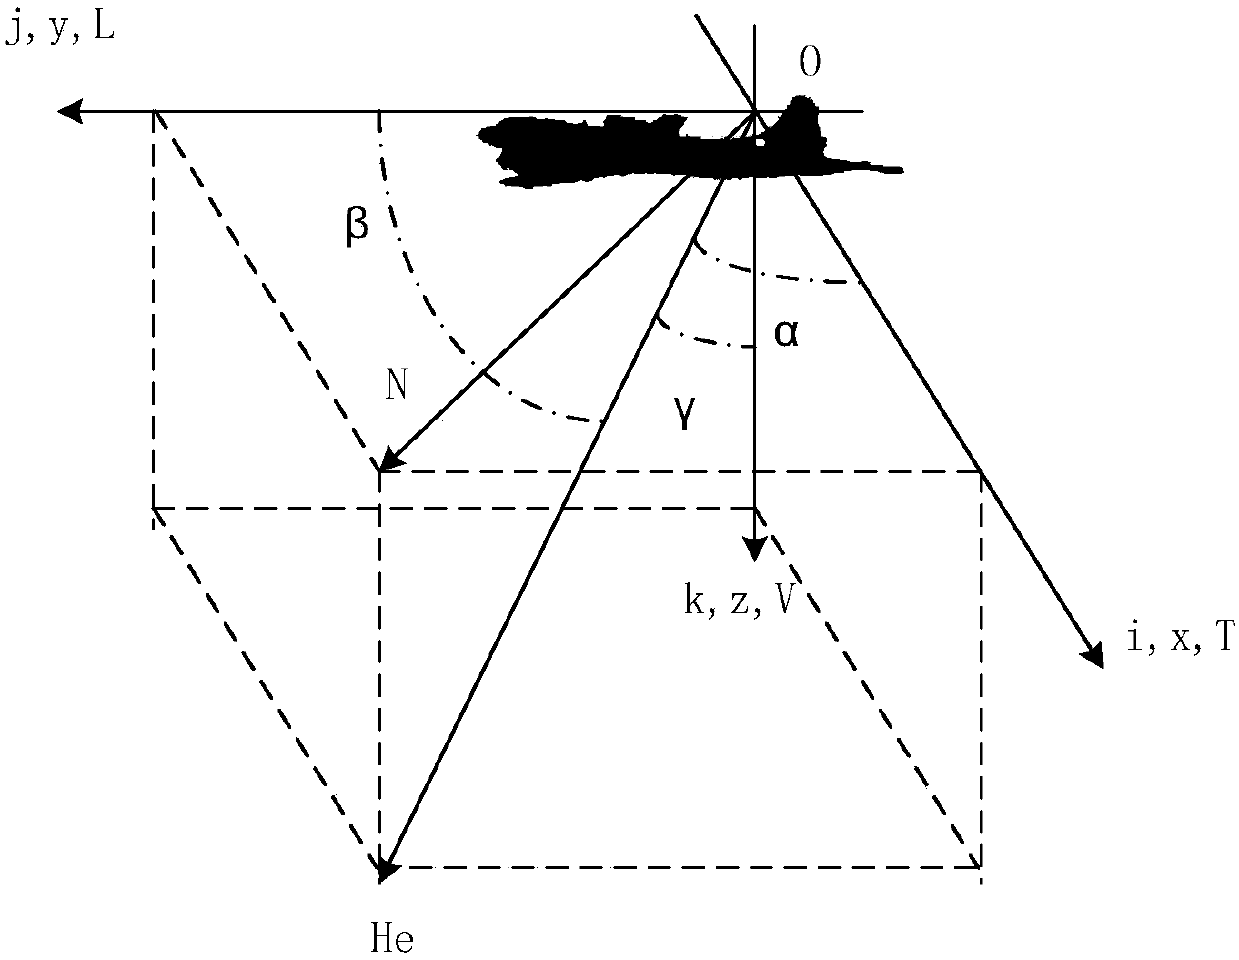 Flight disturbing magnetic field compensation method based on Tikhonov regularization